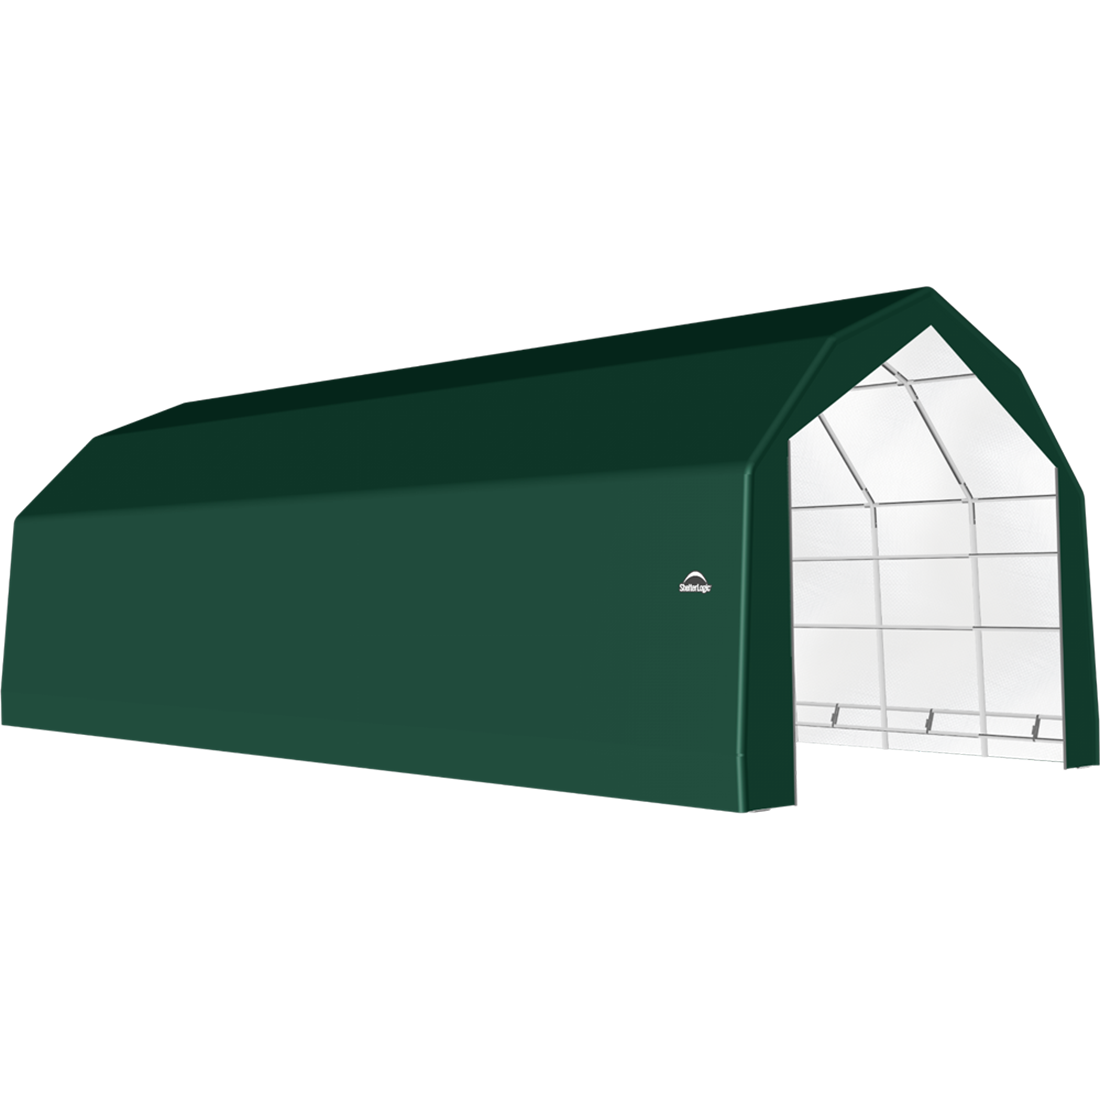 ShelterTech SP Series Barn Shelter, 20 ft. x 44 ft. x 15 ft. Heavy Duty PVC 14.5 oz. Green